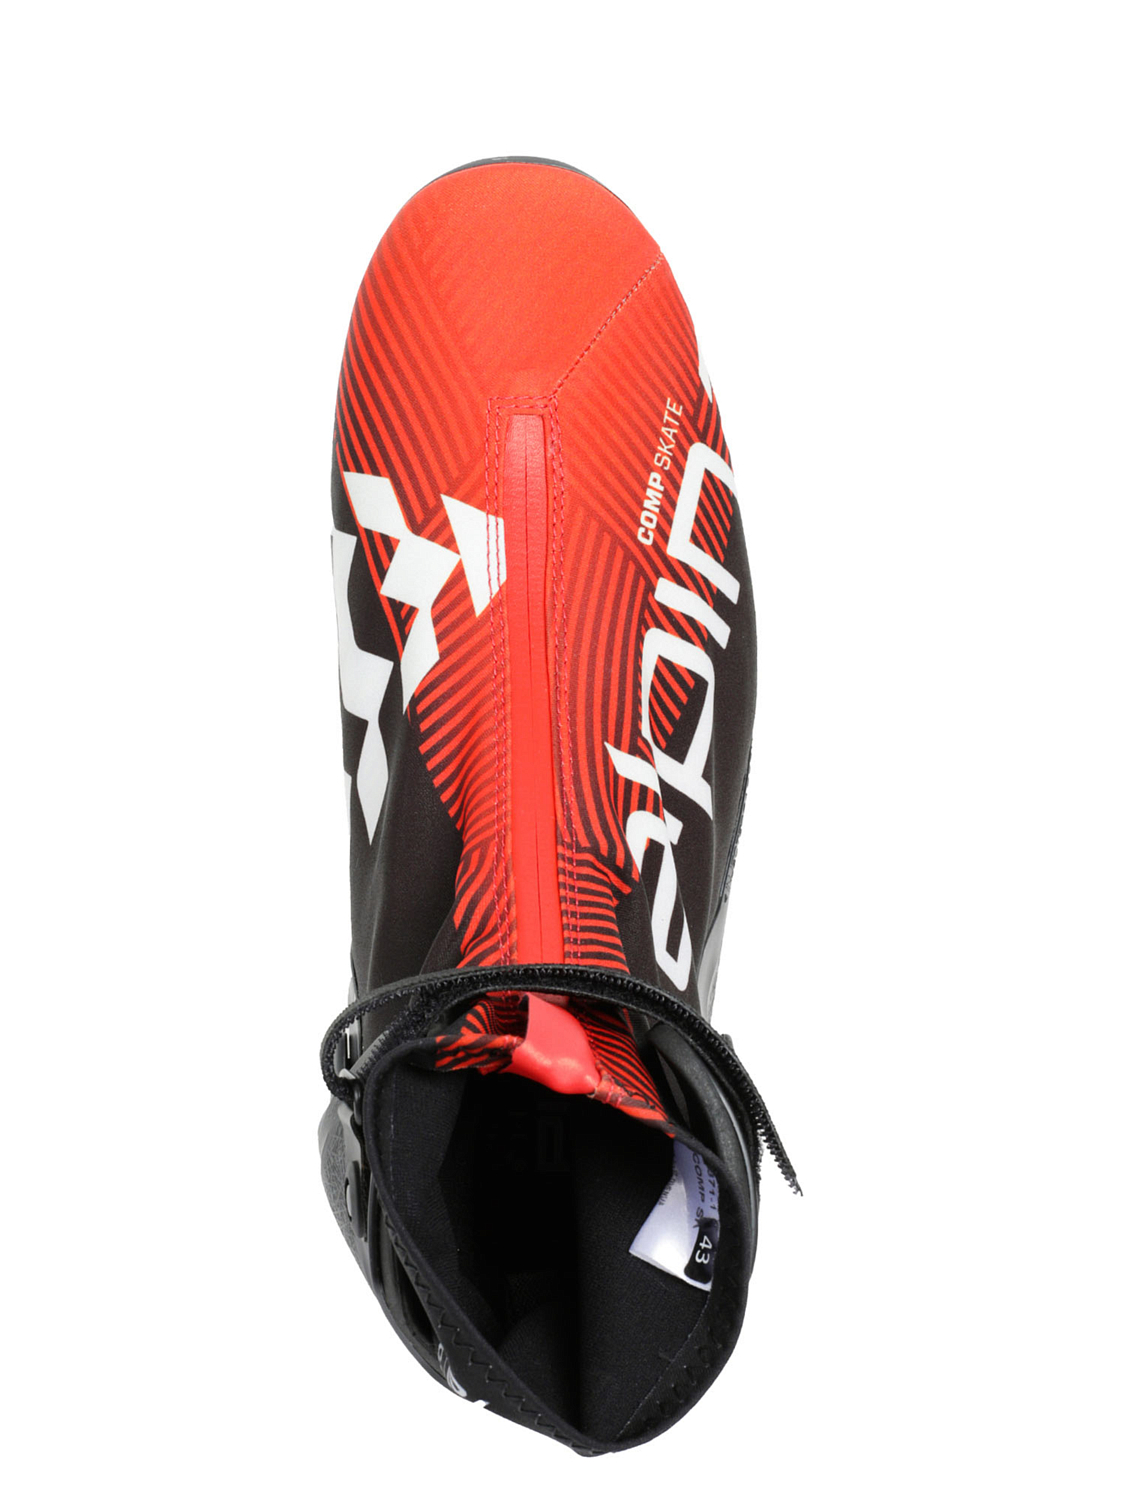 Лыжные ботинки Alpina. COMP Skate Red/White/Black